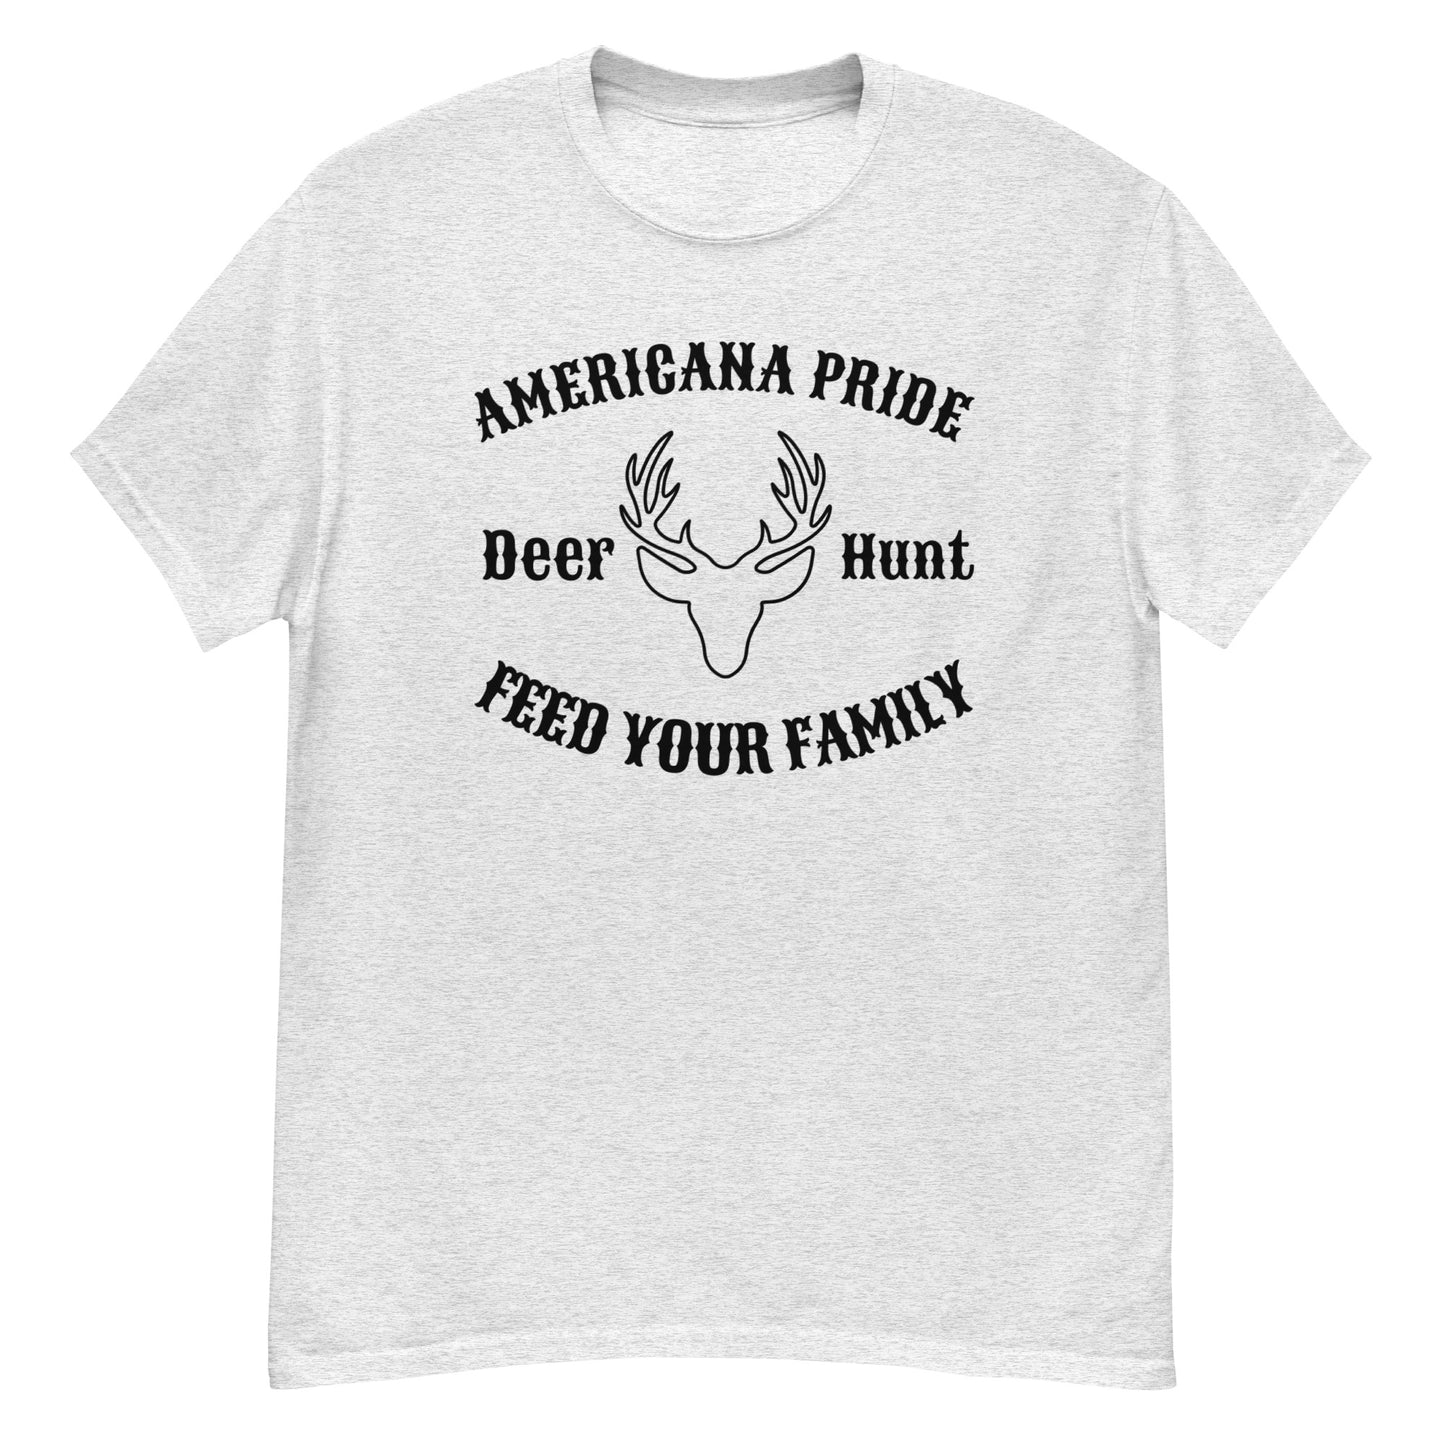 Americana Pride Deer Hunt Feed your family - unisex tee (black lettering)